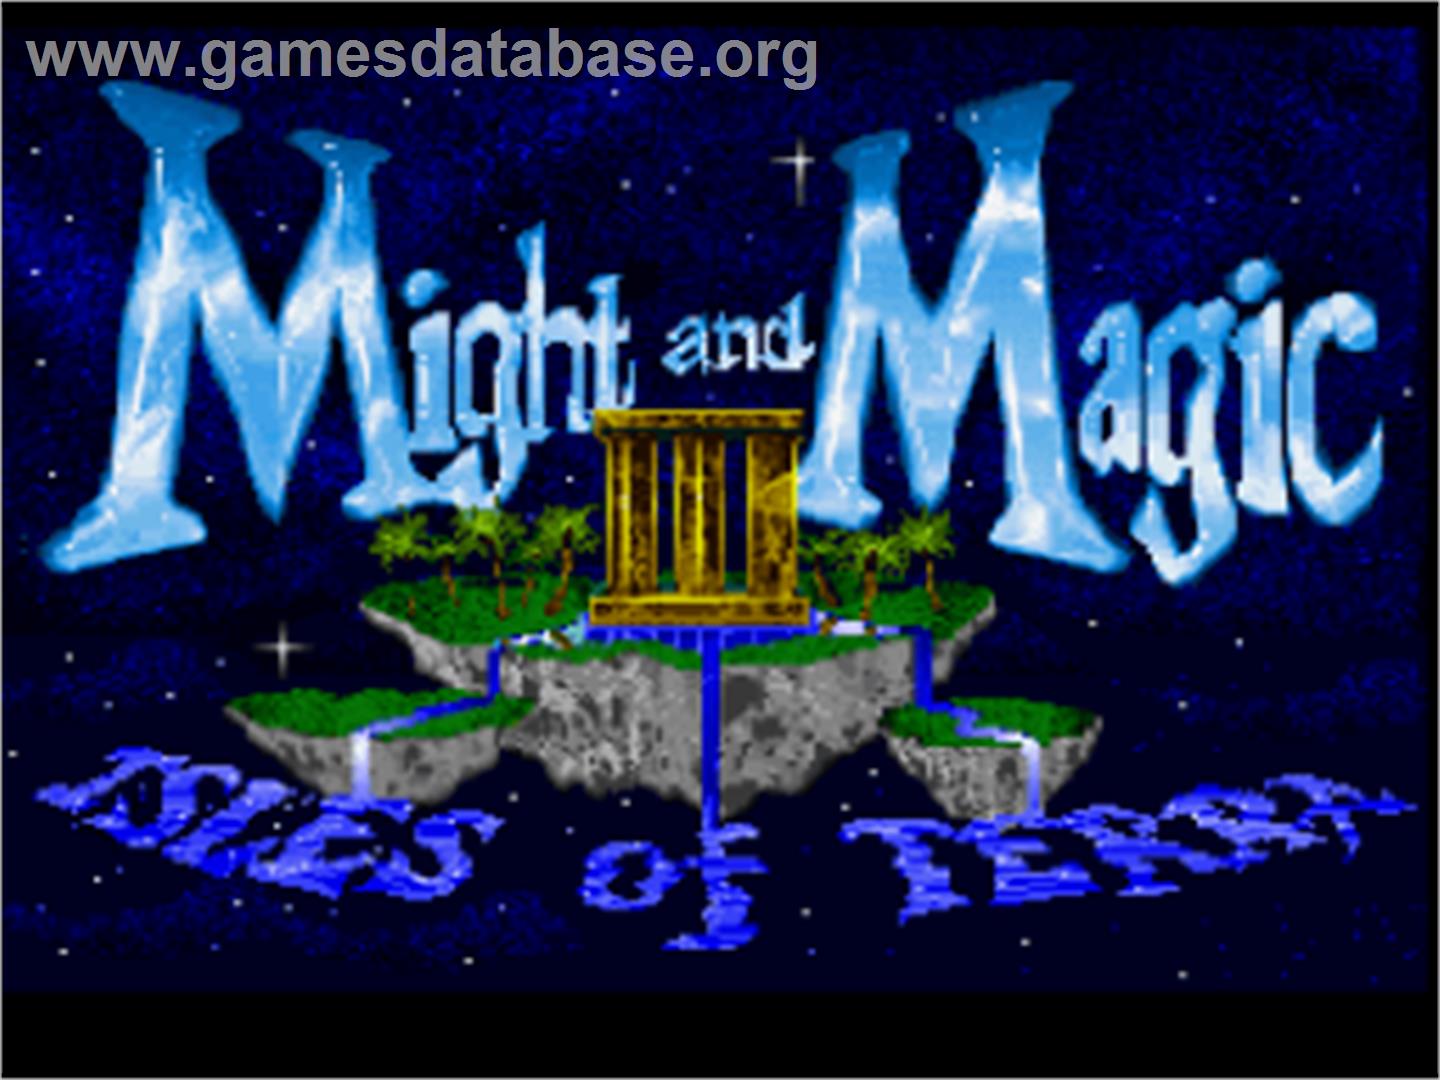 Might and Magic III: Isles of Terra - Nintendo SNES - Artwork - Title Screen